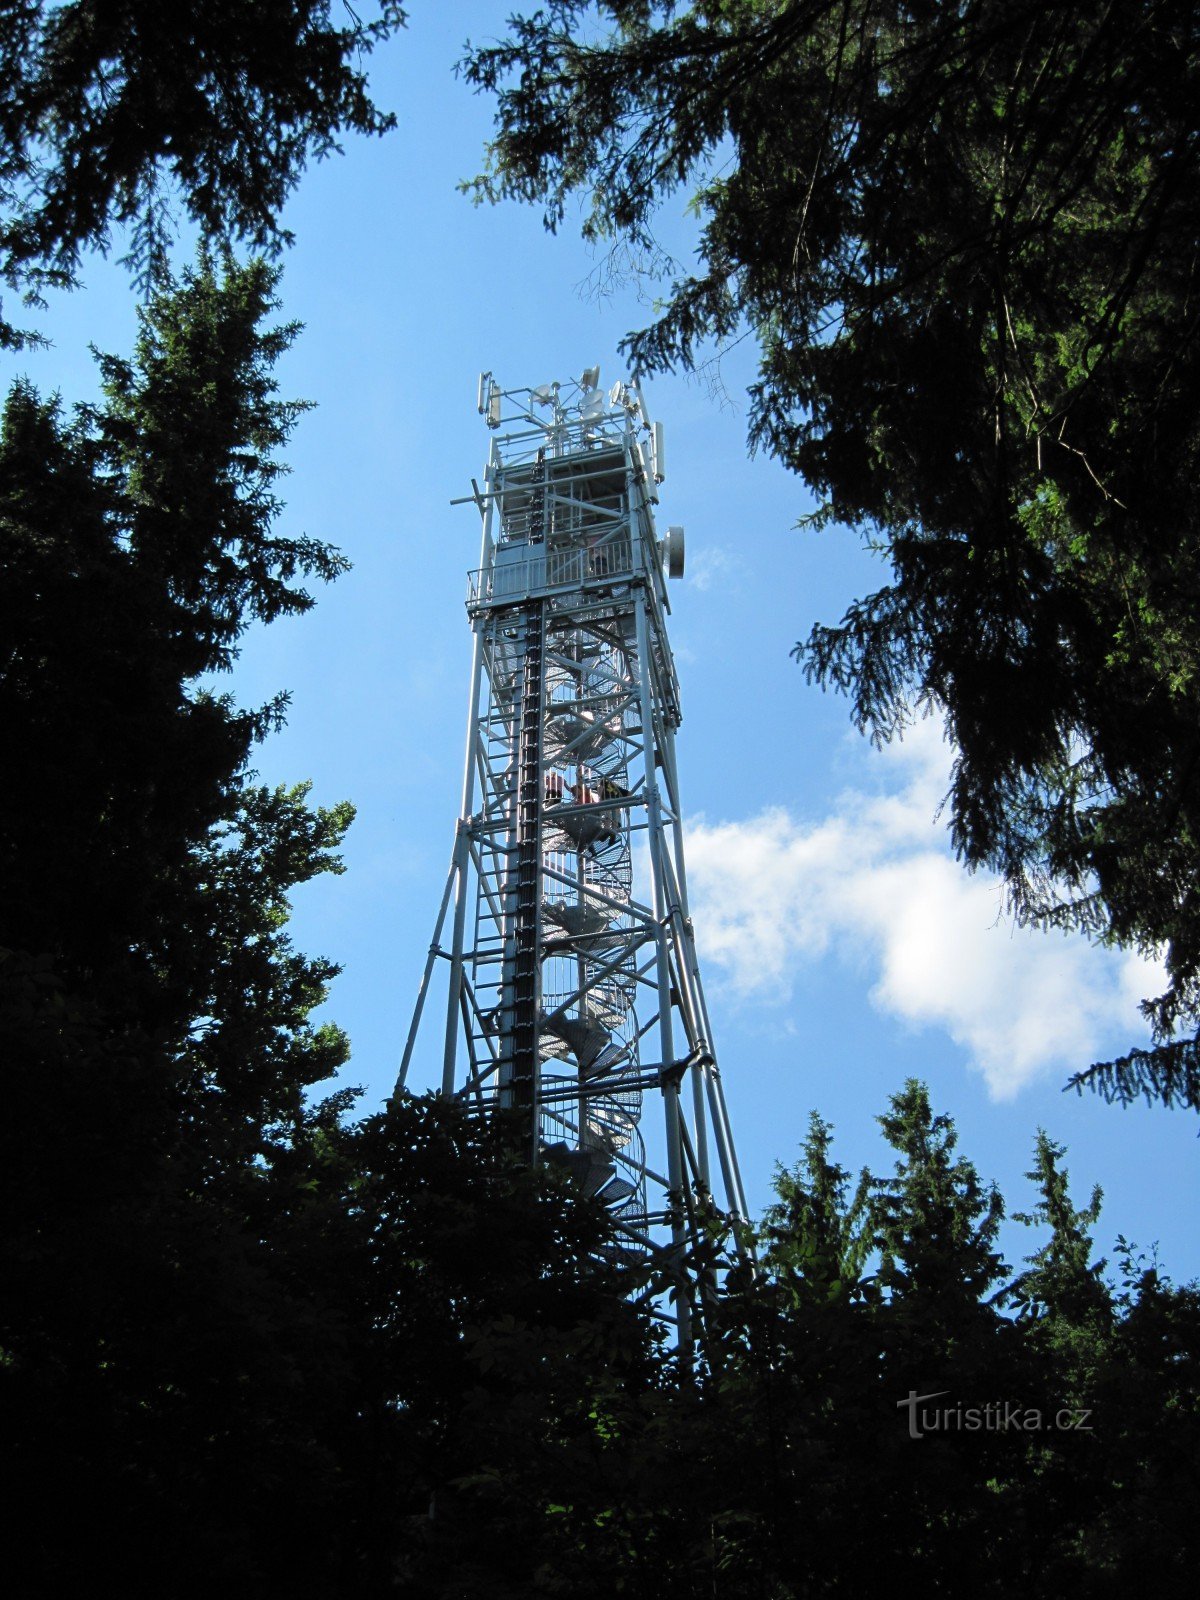 Telecommunication tower with observation tower on Kraví hora